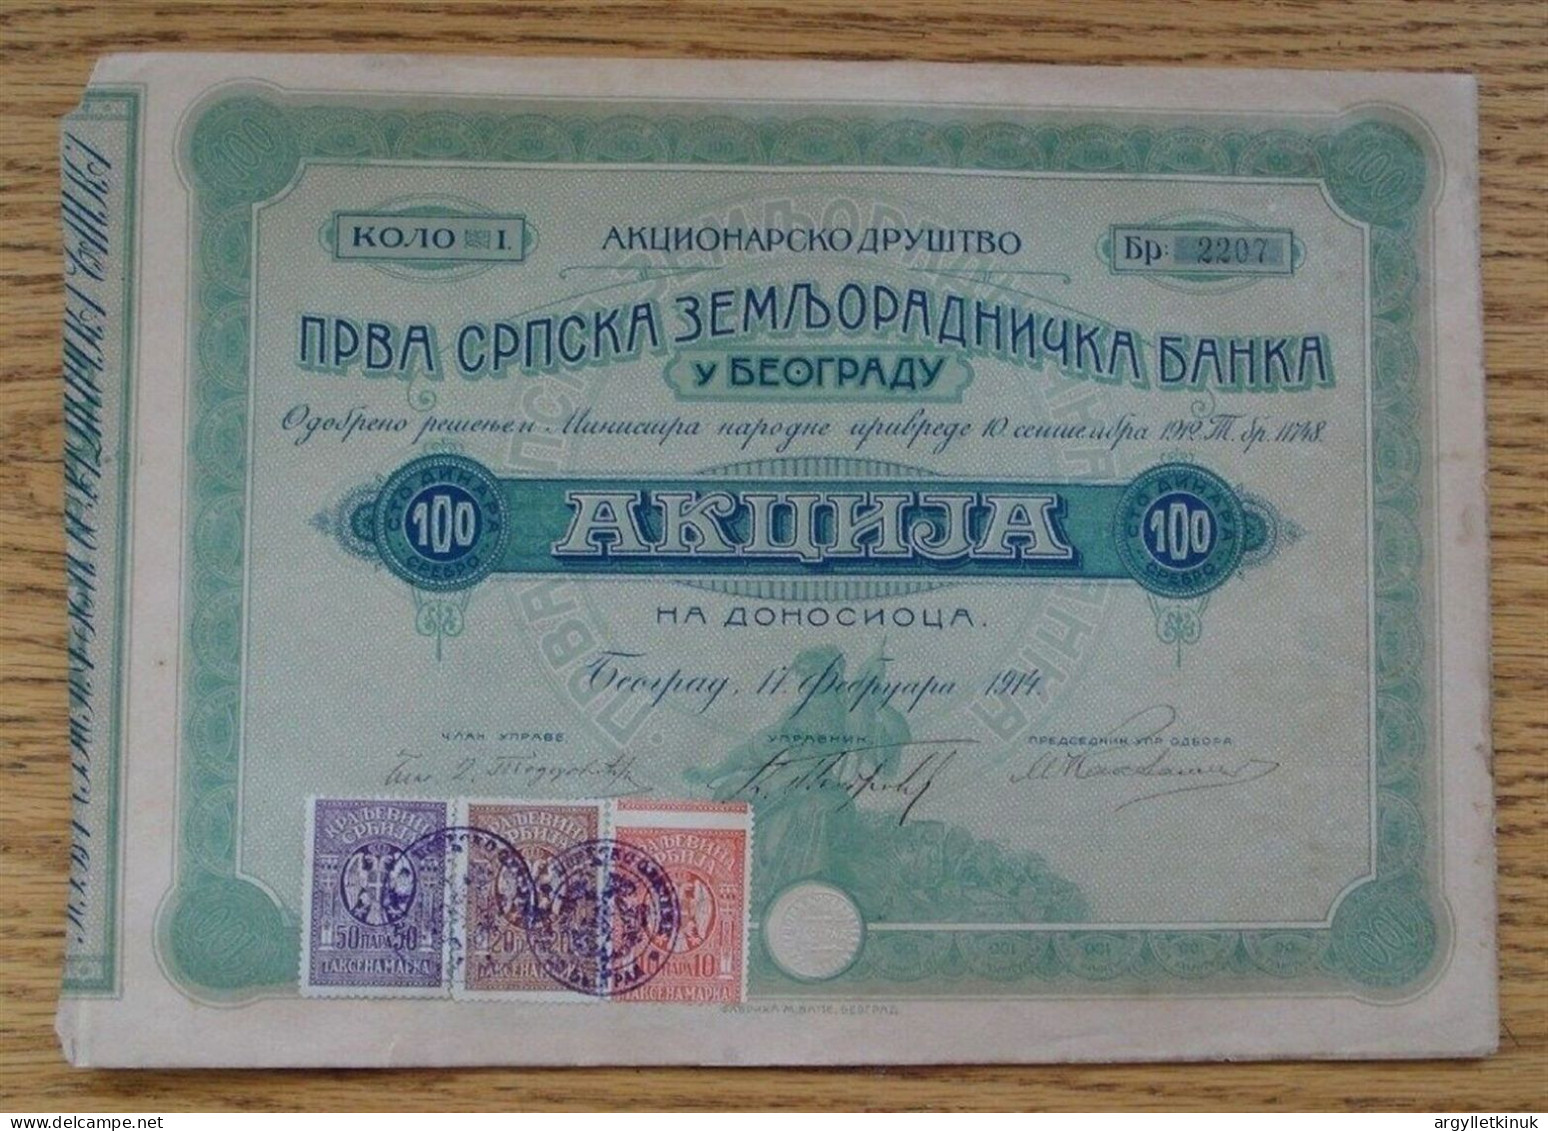 FINE 100 SHARE CERTIFICATE FOR THE SERBIAN LAND BANK BELGRADE 17 FEBRUARY 1914 - Banca & Assicurazione